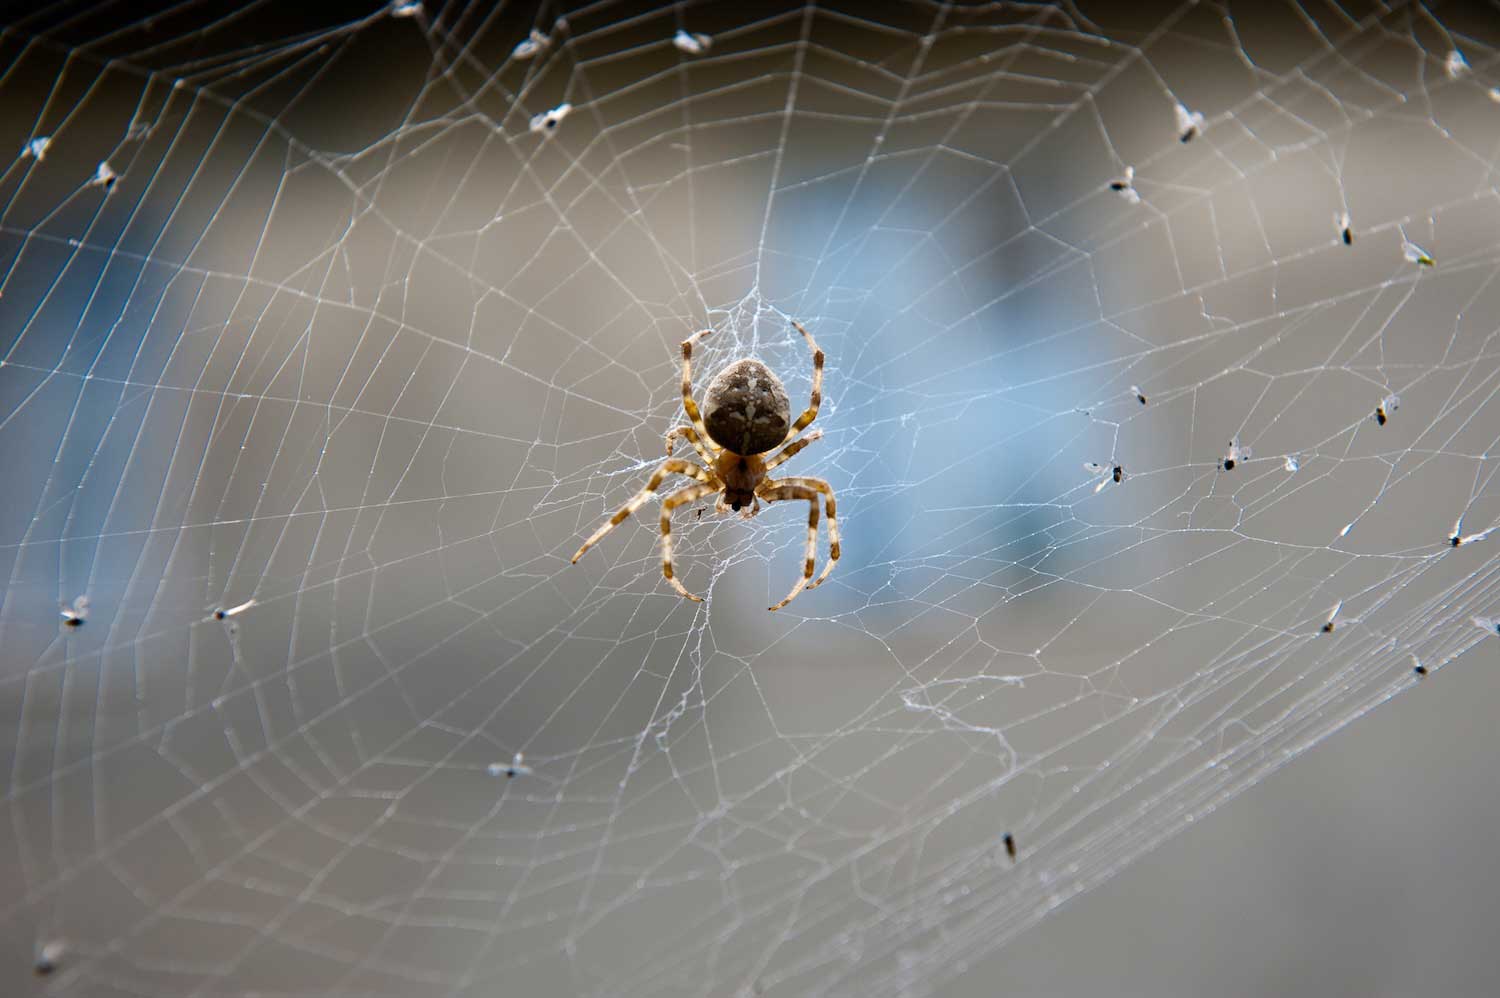 https://www.reconnectwithnature.org/getmedia/cd7f767a-dca1-419c-b4b9-5c00a2f4914c/Spider-in-web-with-bugs-Shutterstock.jpg?width=1500&height=998&ext=.jpg